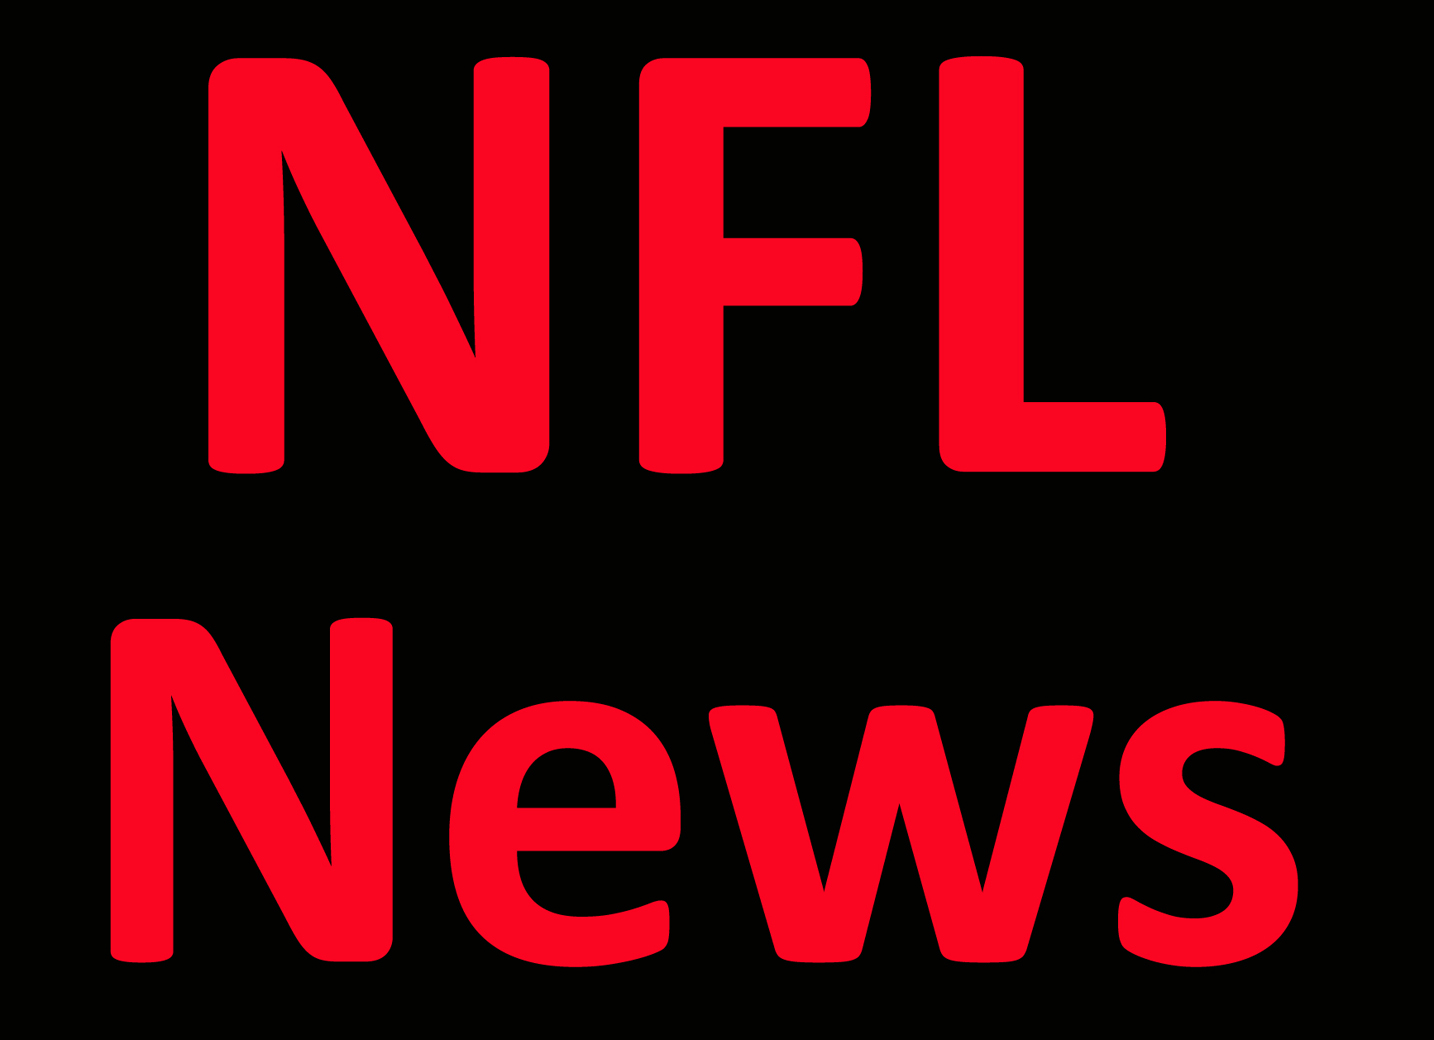 NFL News: Cards cut starting linebacker Hicks, save $6.5M Per Report